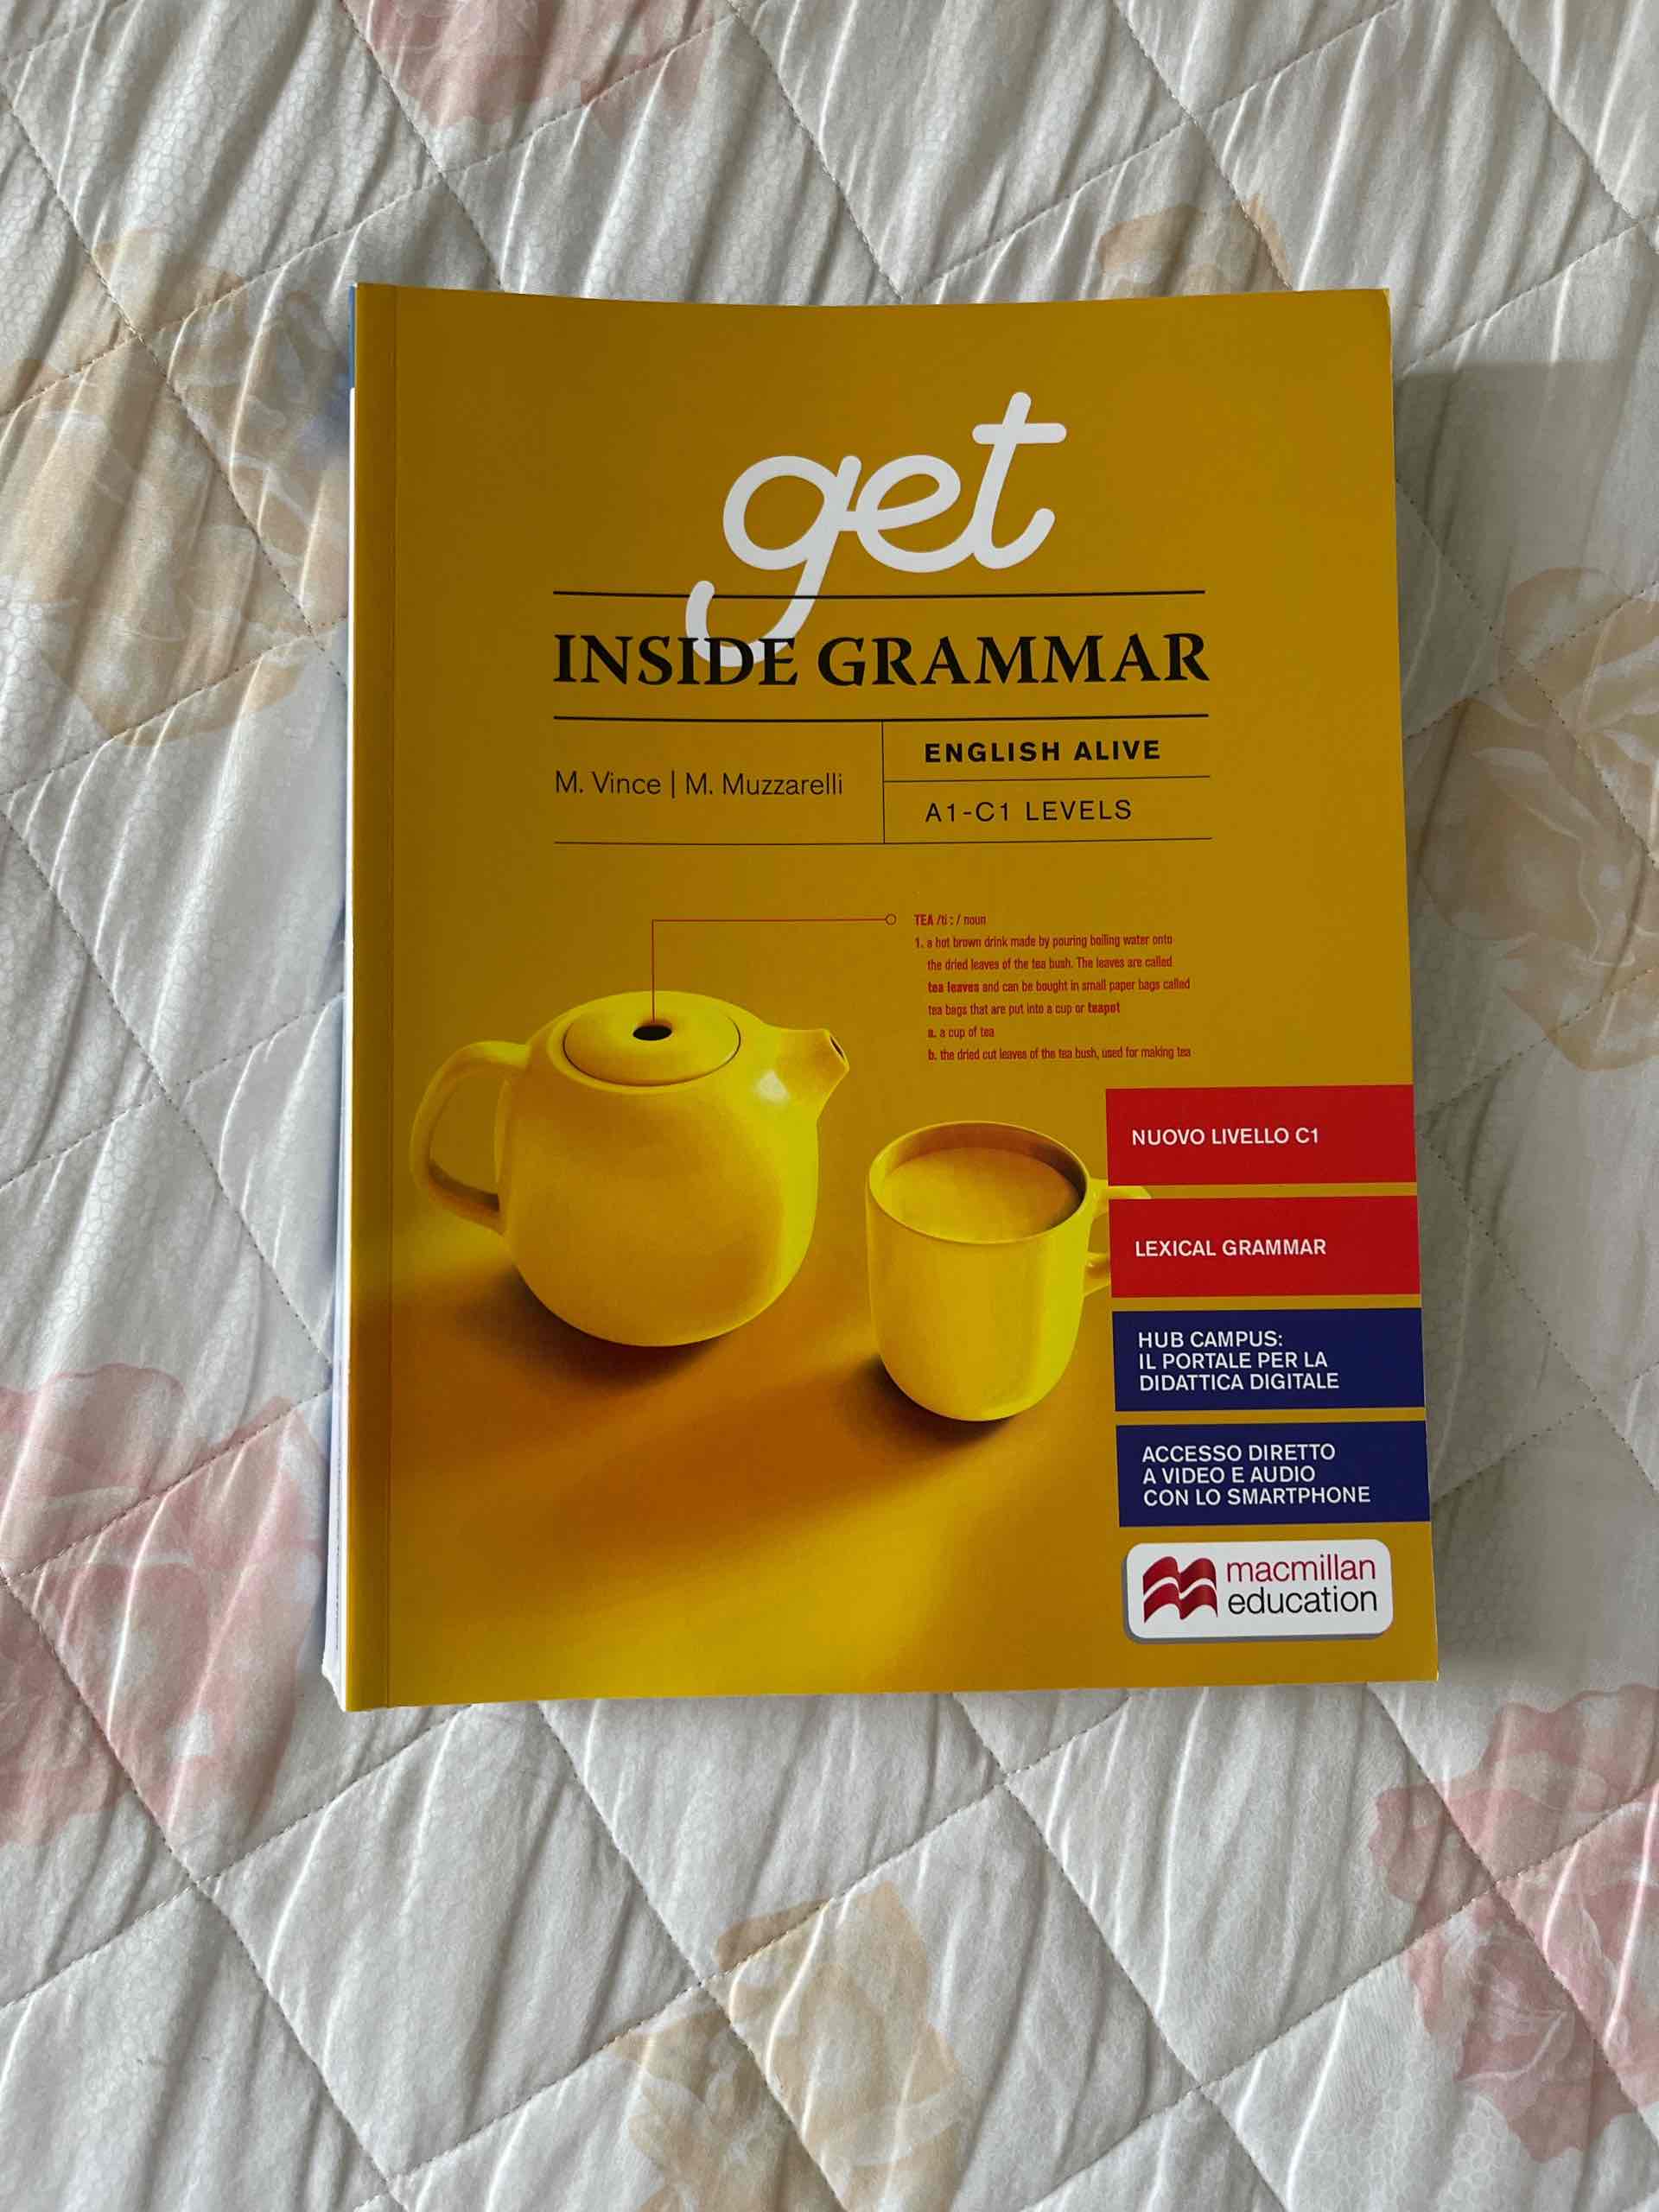 Get inside grammar libro usato